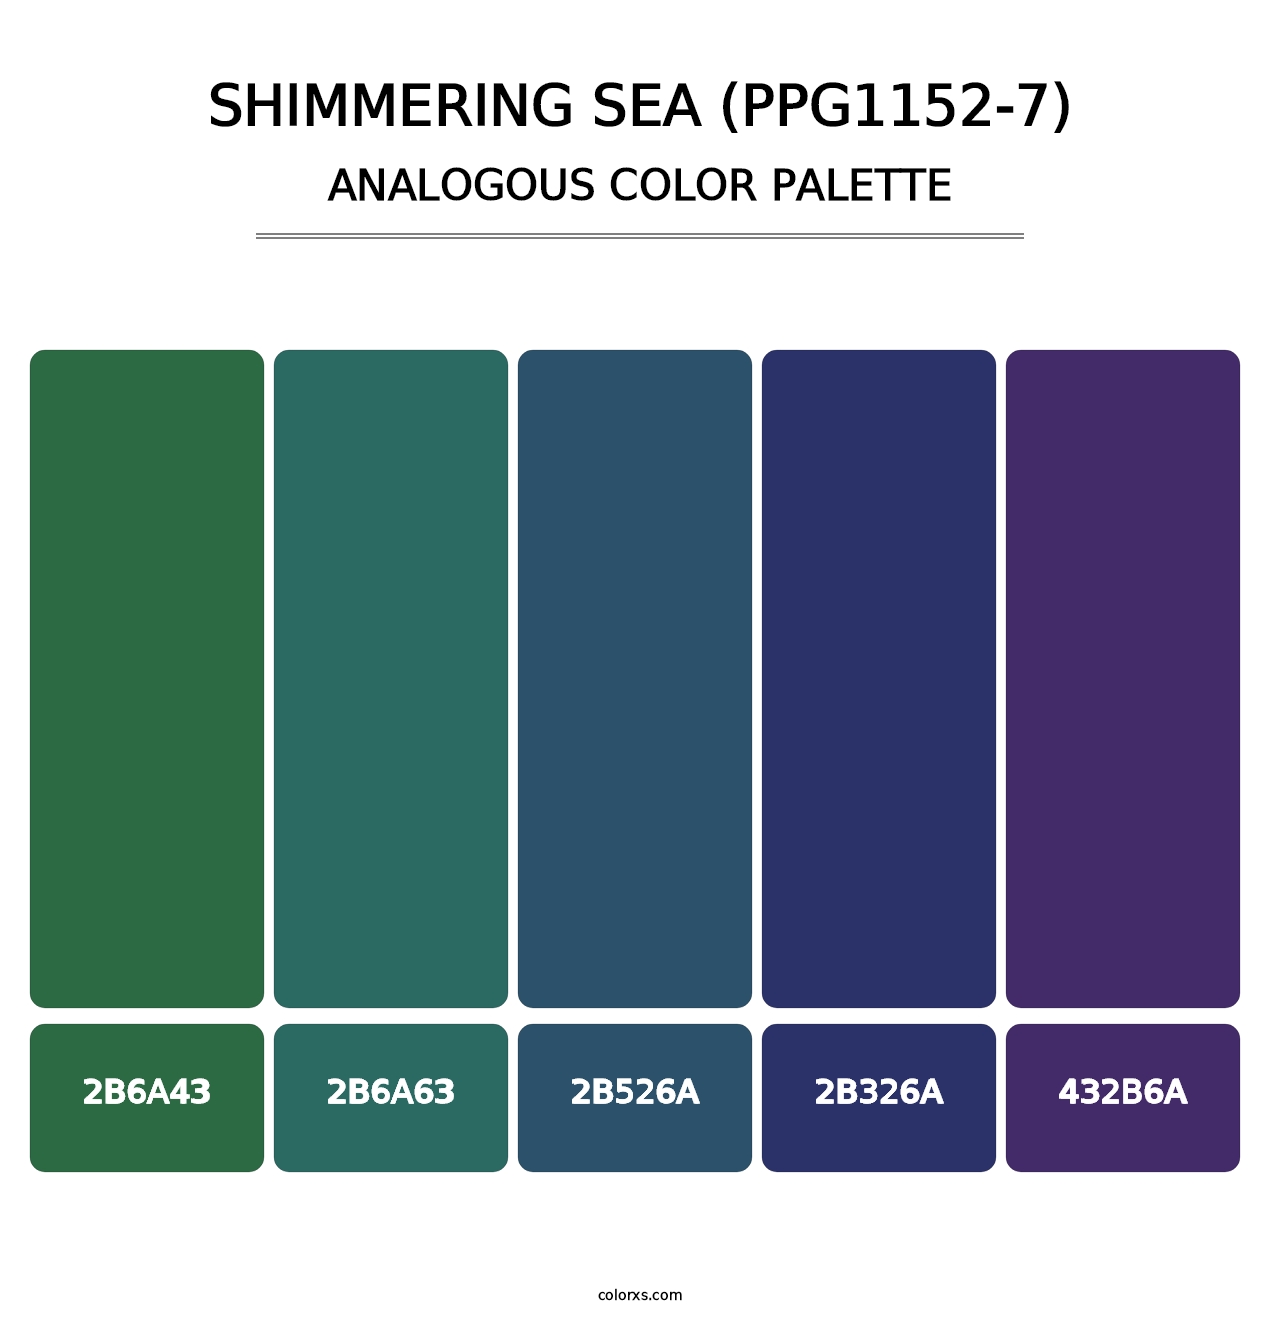 Shimmering Sea (PPG1152-7) - Analogous Color Palette